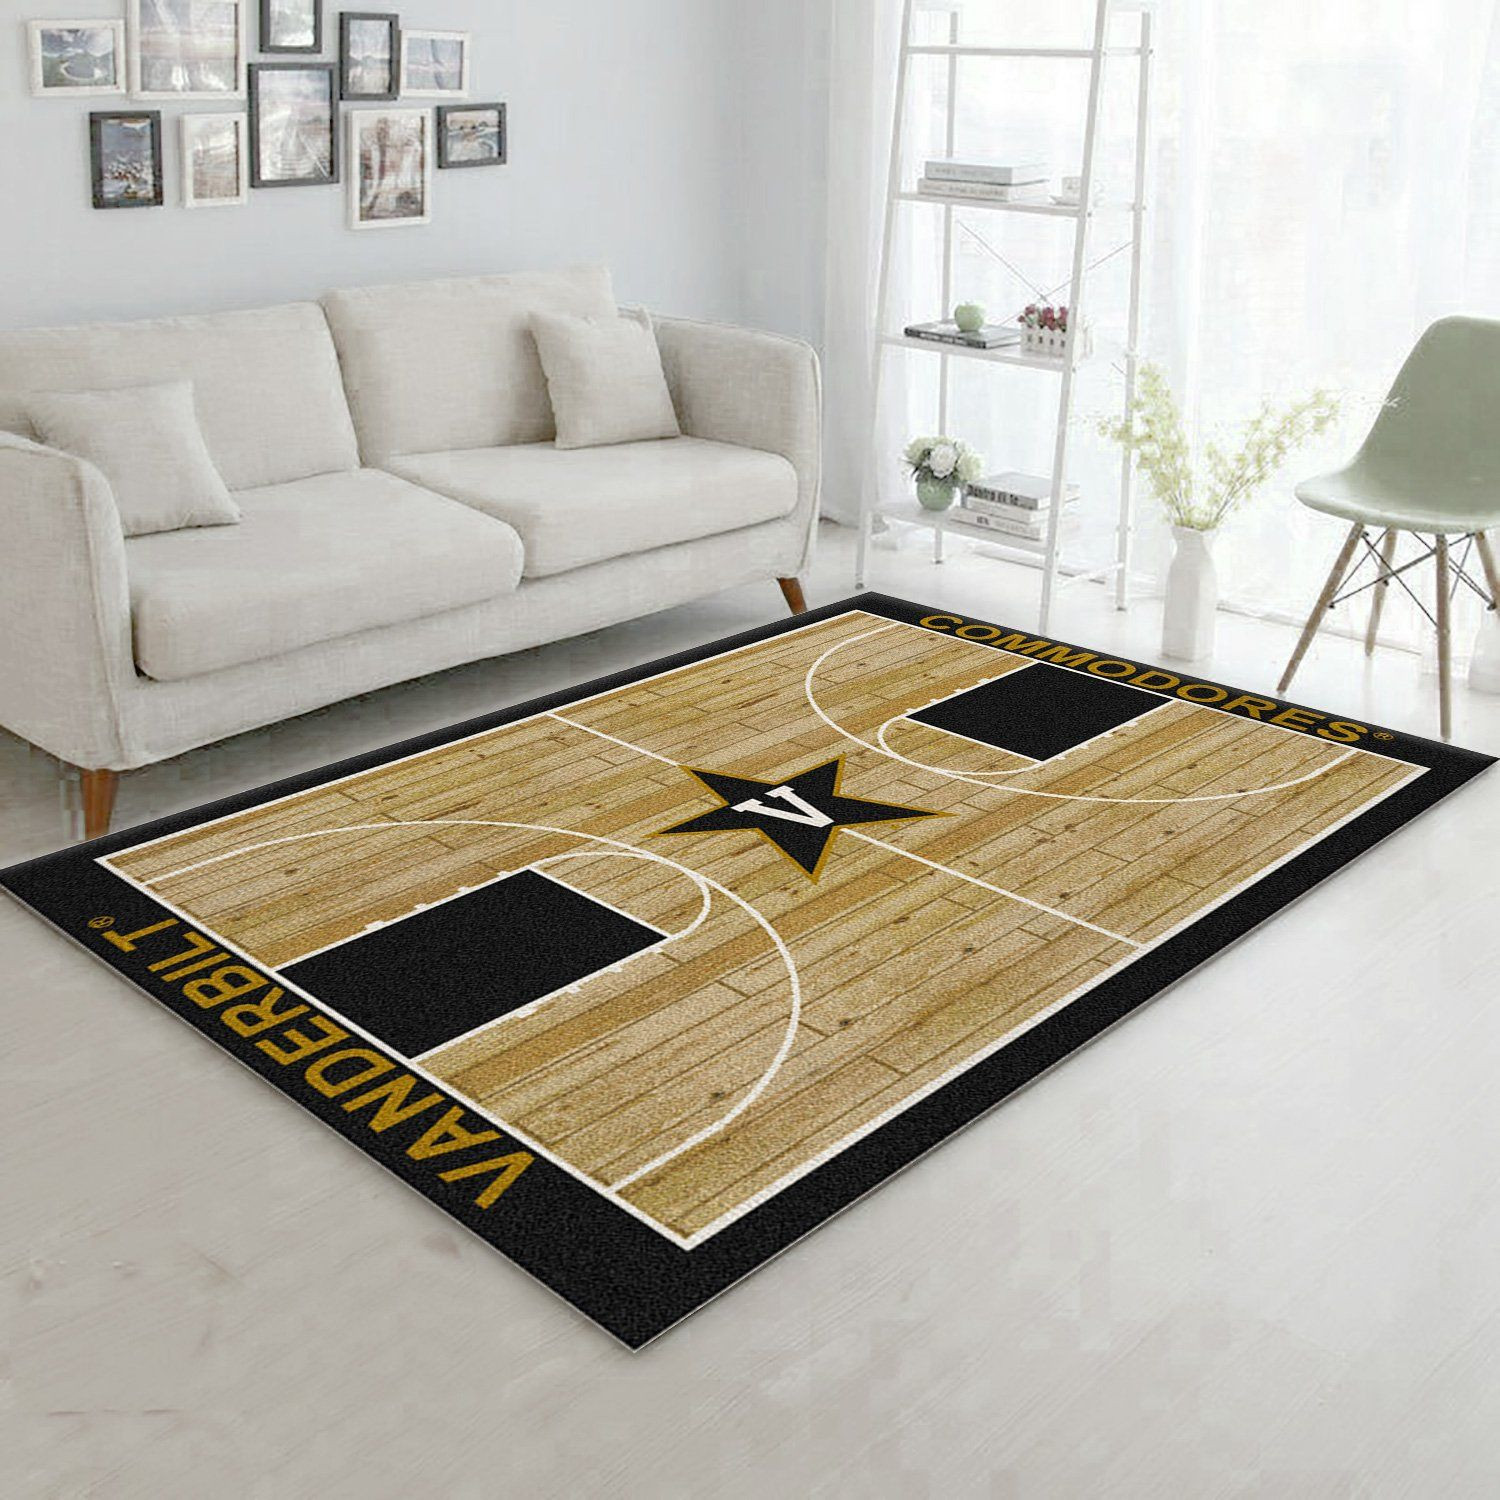 College Home Court Vanderbilt Basketball Team Logo Area Rug, Kitchen Rug, Home Decor Floor Decor - Indoor Outdoor Rugs 3